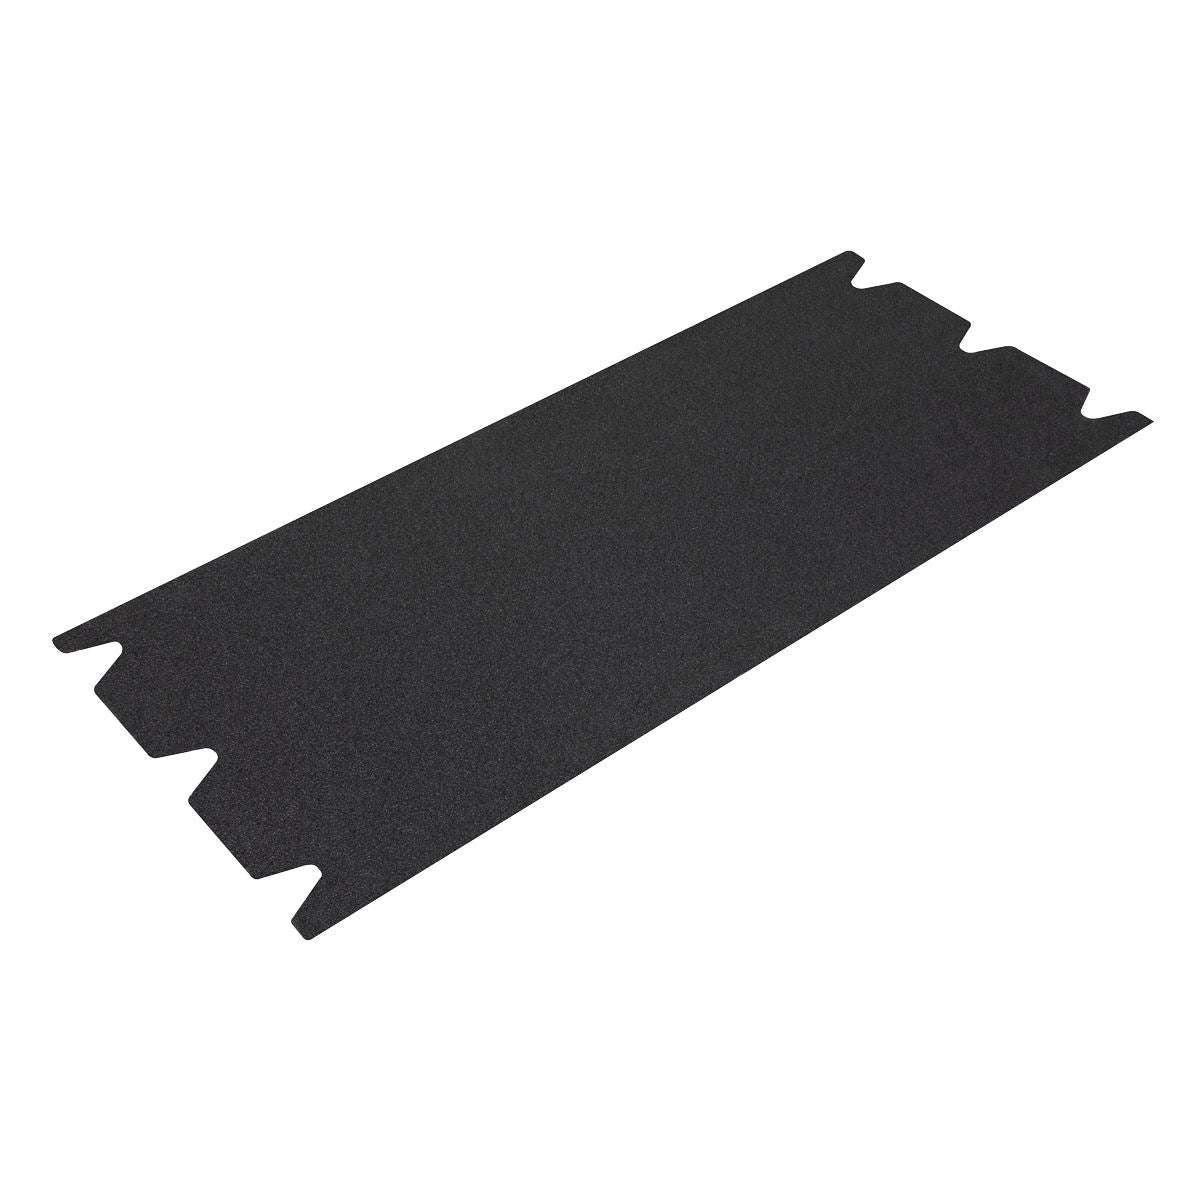 Sealey Floor Sanding Sheet 203 x 495mm 40Grit - Pack of 5